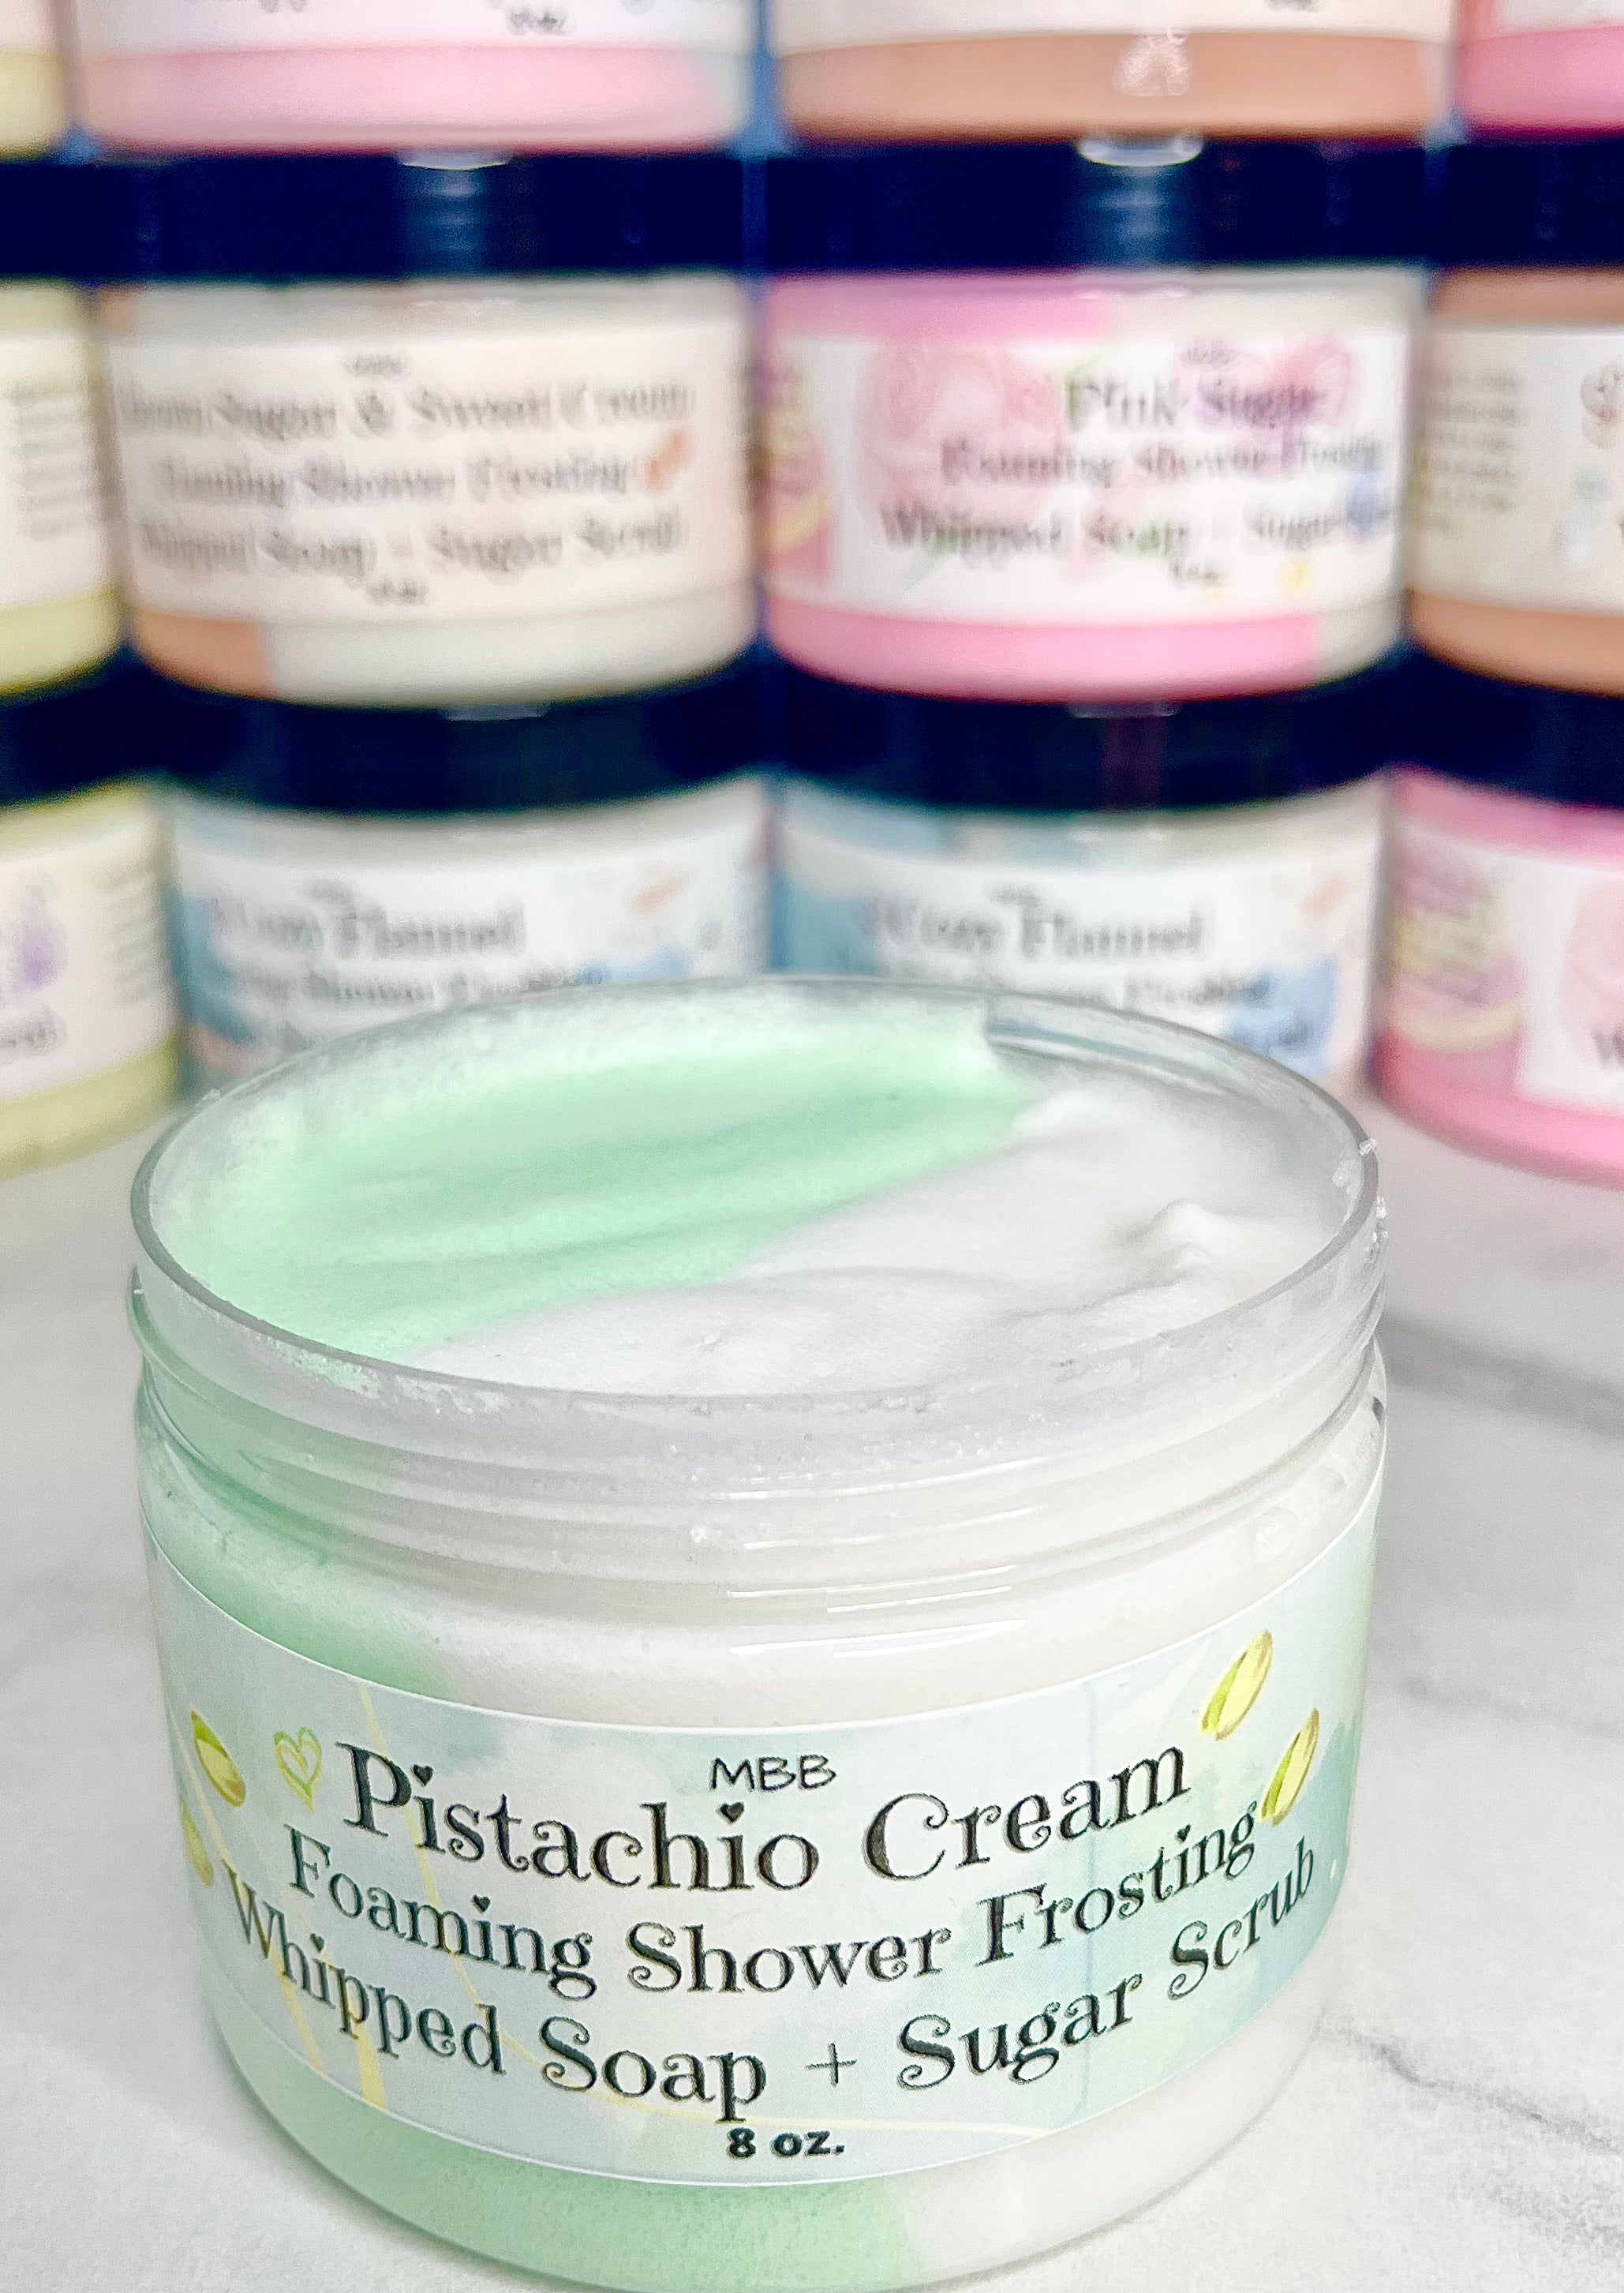 Pistachio Cream Foaming Shower Frosting | Whipped Soap and Sugar Scrub | Sugar Scrub